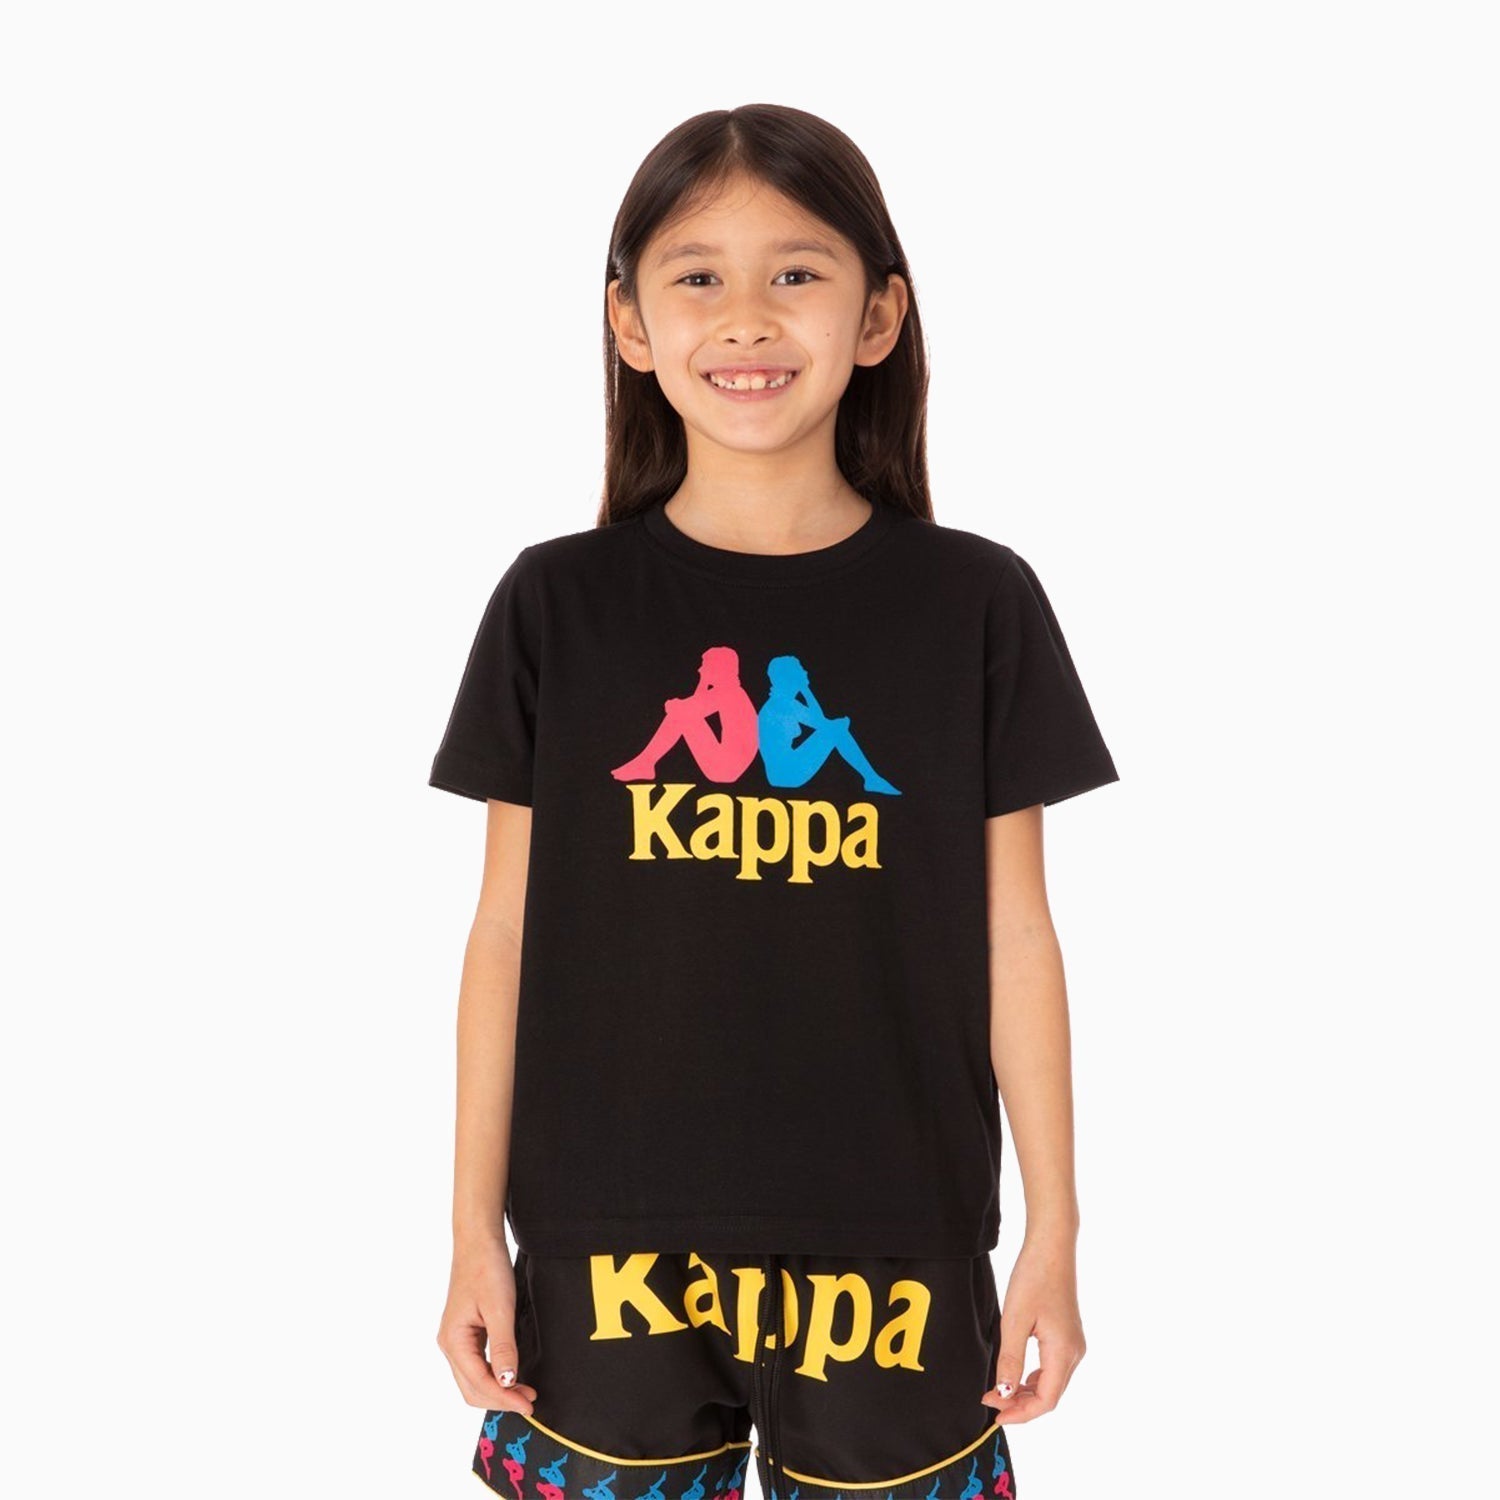 Kappa Kid's Authentic Estessi Outfit - Color: BLACK BLUE YELLOW - Kids Premium Clothing -